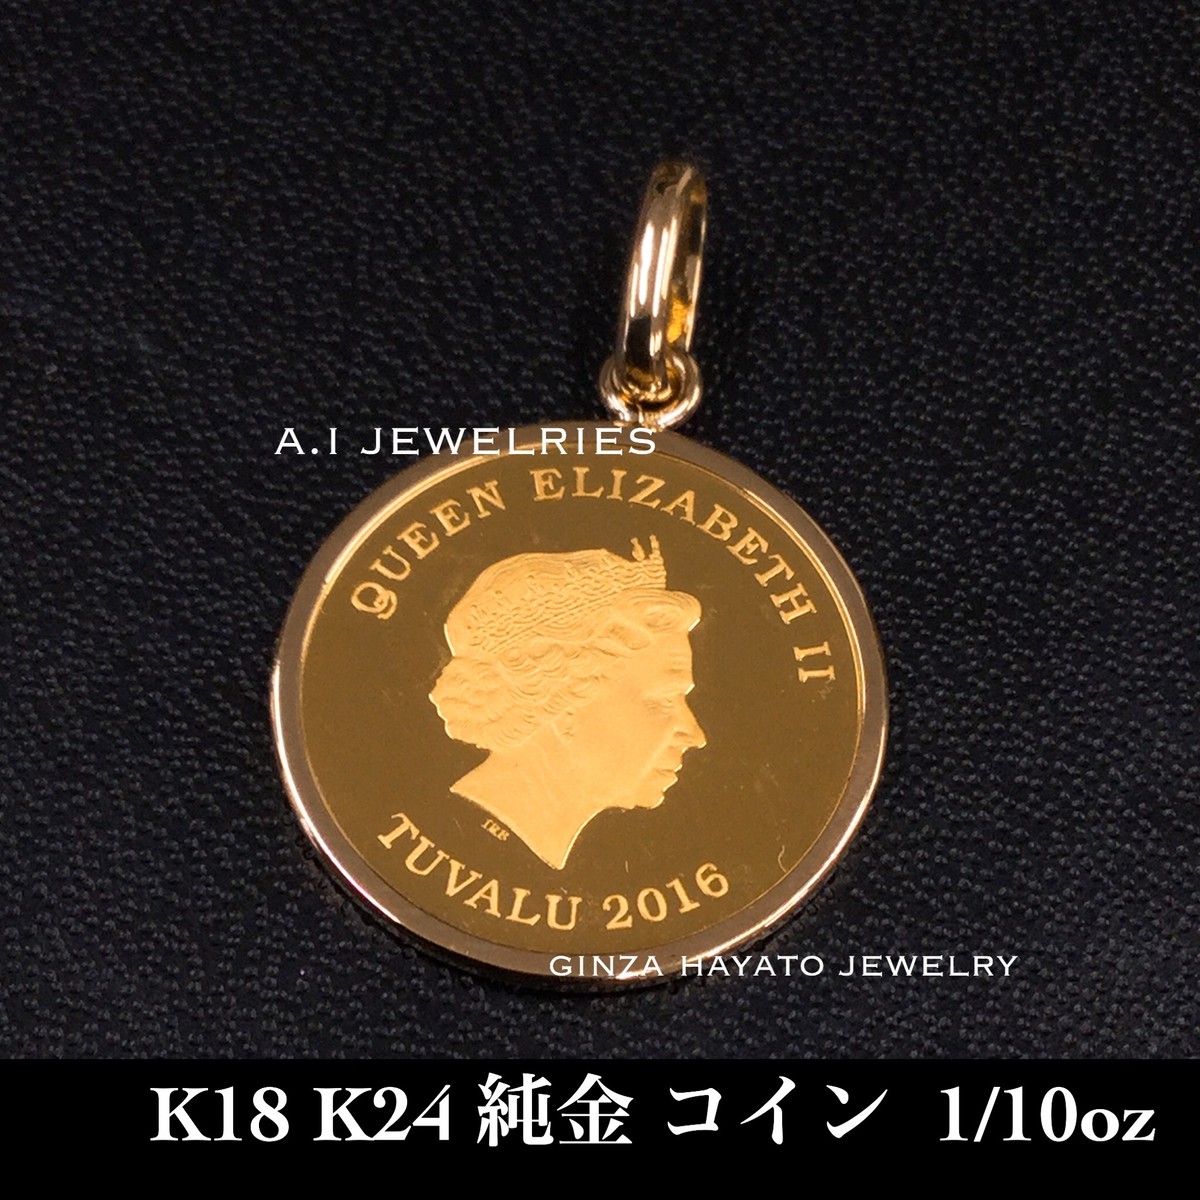 K18 K24 18金 純金コイン ペンダント 1 10オンス メンズ レディース 兼用 新品 本物 シンプル おしゃれ 水濡れok A I Jewelries エイアイジュエリーズ